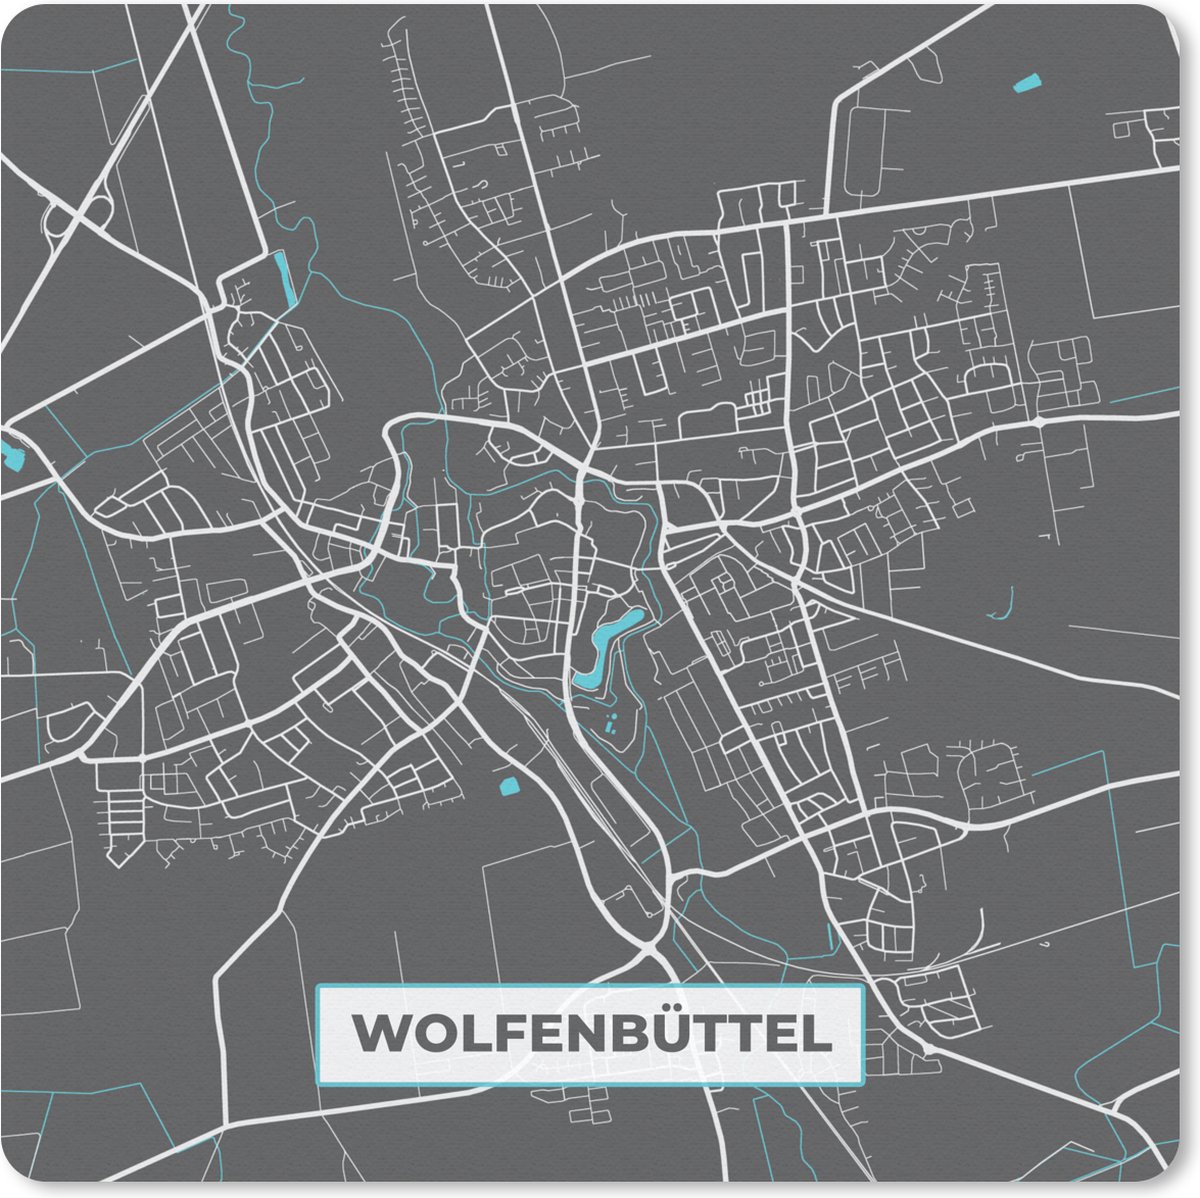 Muismat Klein - Plattegrond – Wolfenbüttel – Blauw – Stadskaart – Kaart - Duitsland - 20x20 cm